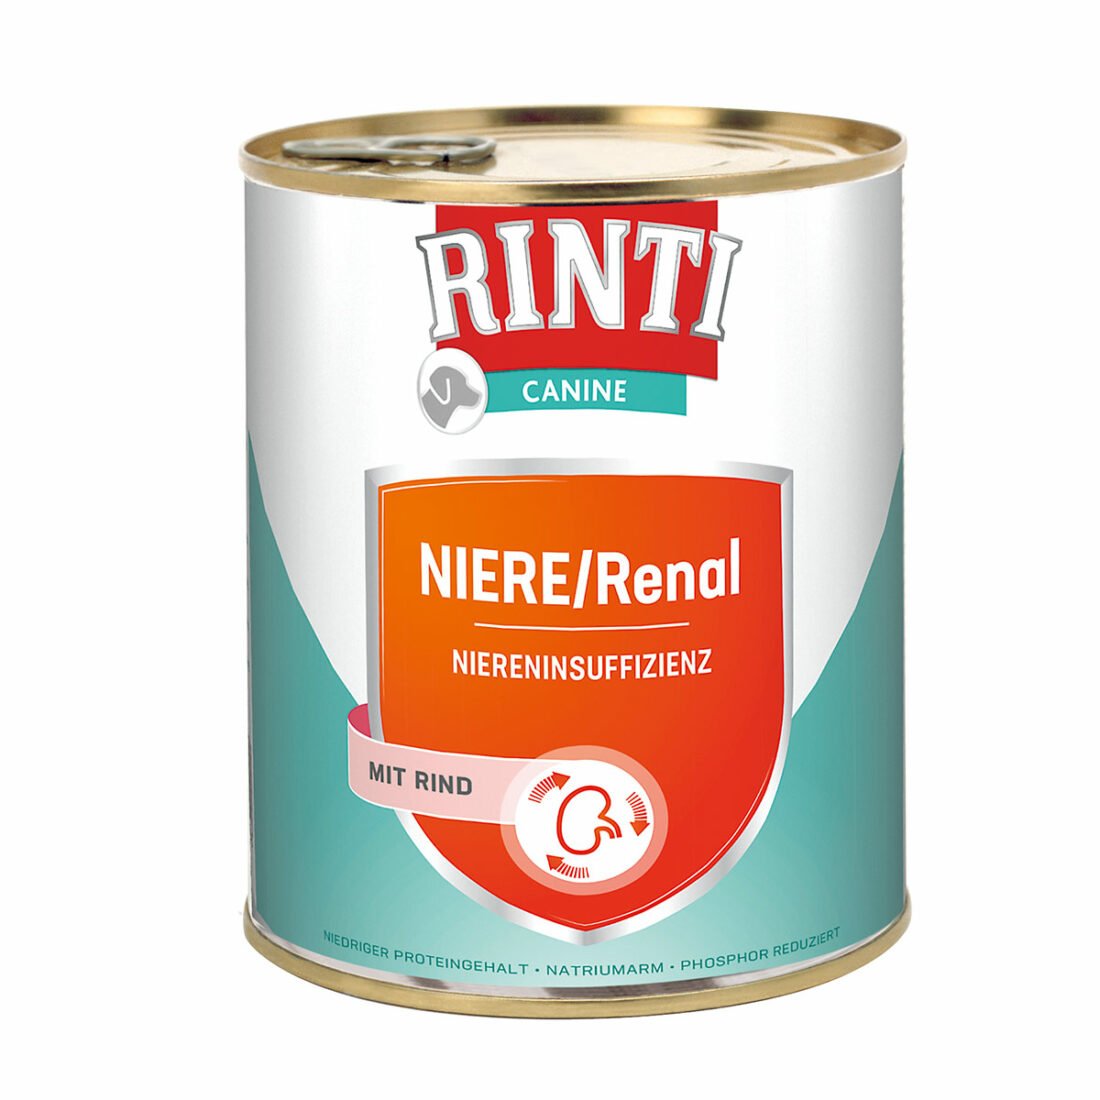 RINTI Canine Niere/Renal hovězí maso 6